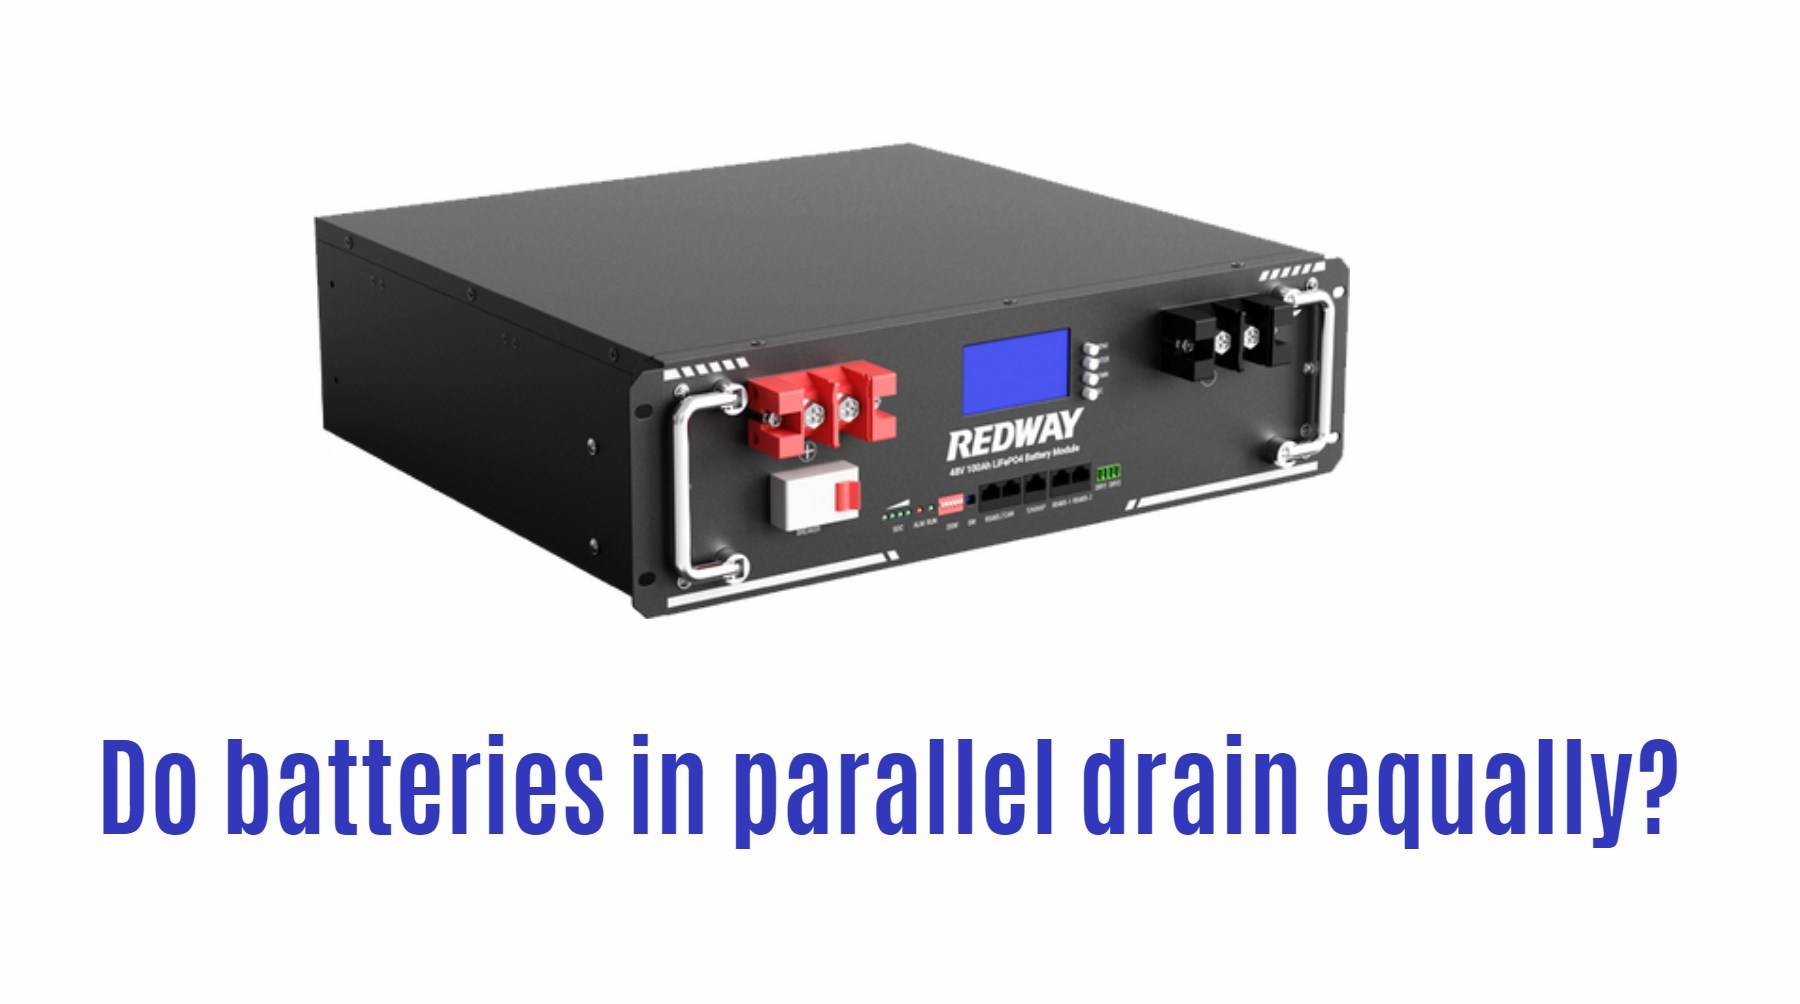 48v 100ah server rack battery factory manufacturer. Do batteries in parallel drain equally?